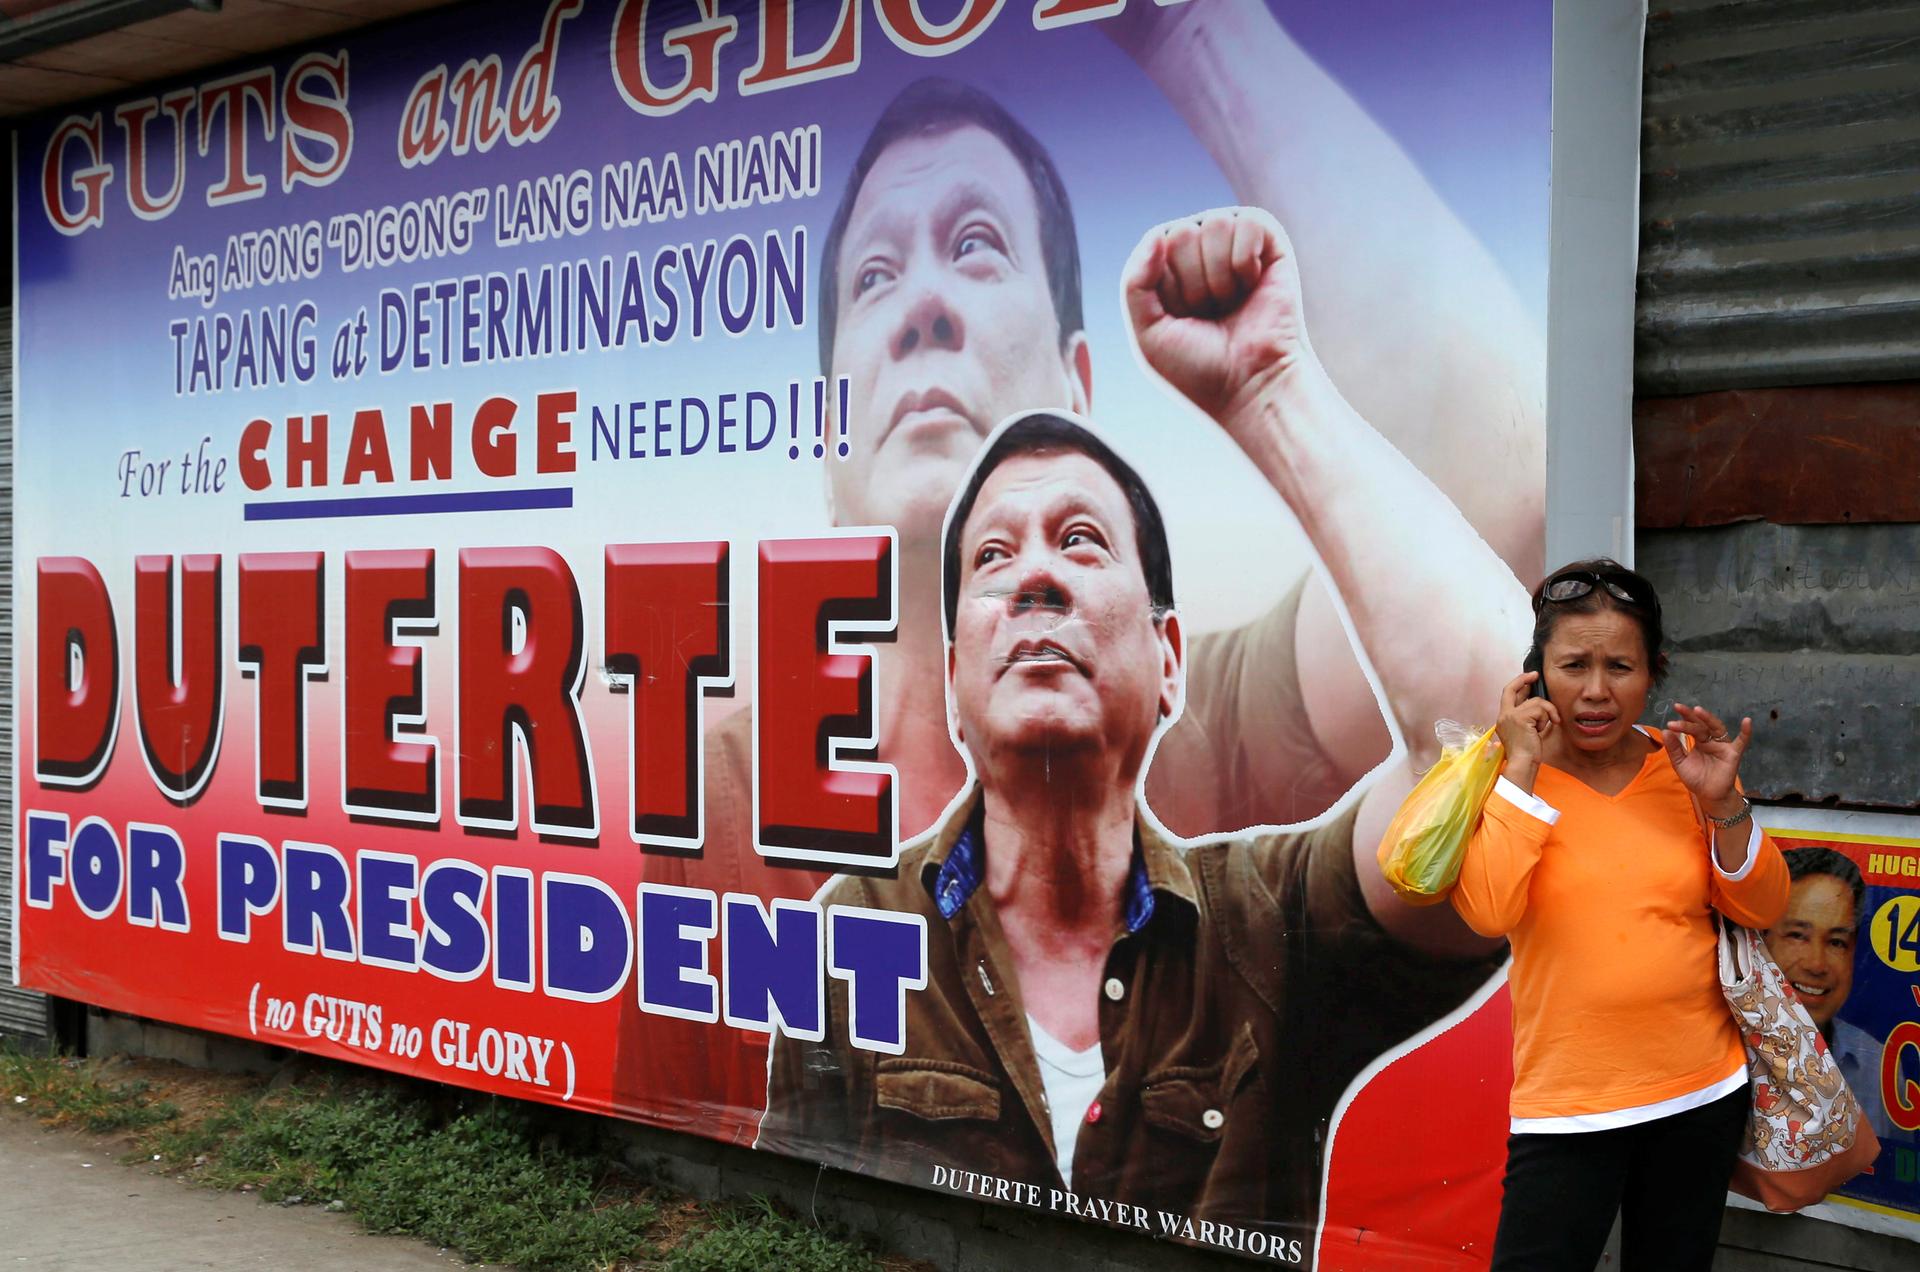 Rodrigo Duterte guts glory